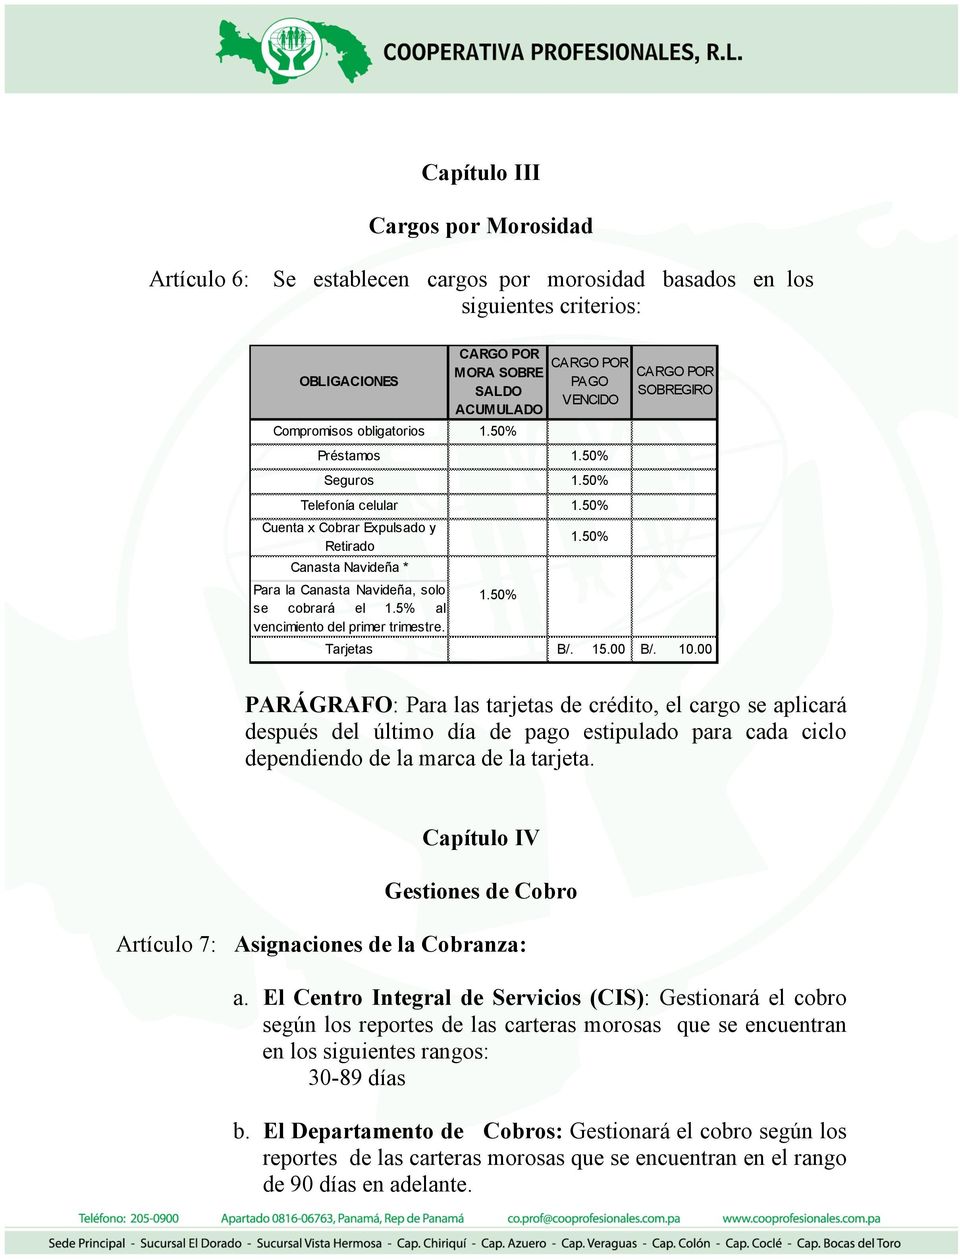 CARGO POR MORA SOBRE SALDO ACUMULADO 1.50% CARGO POR PAGO VENCIDO 1.50% CARGO POR SOBREGIRO Tarjetas B/. 15.00 B/. 10.